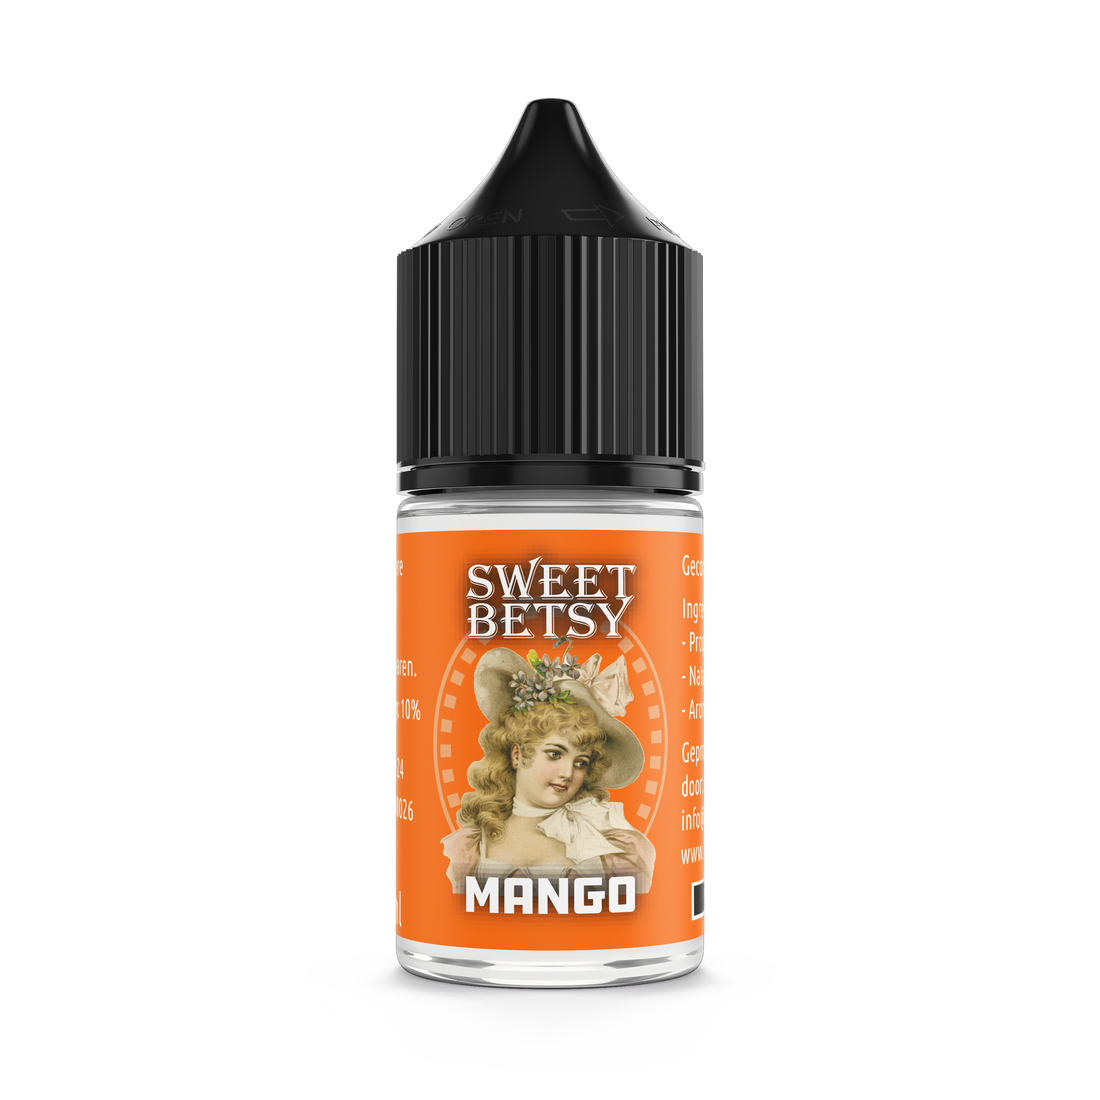 Sweet Betsy Mango aroma - Flavormonks